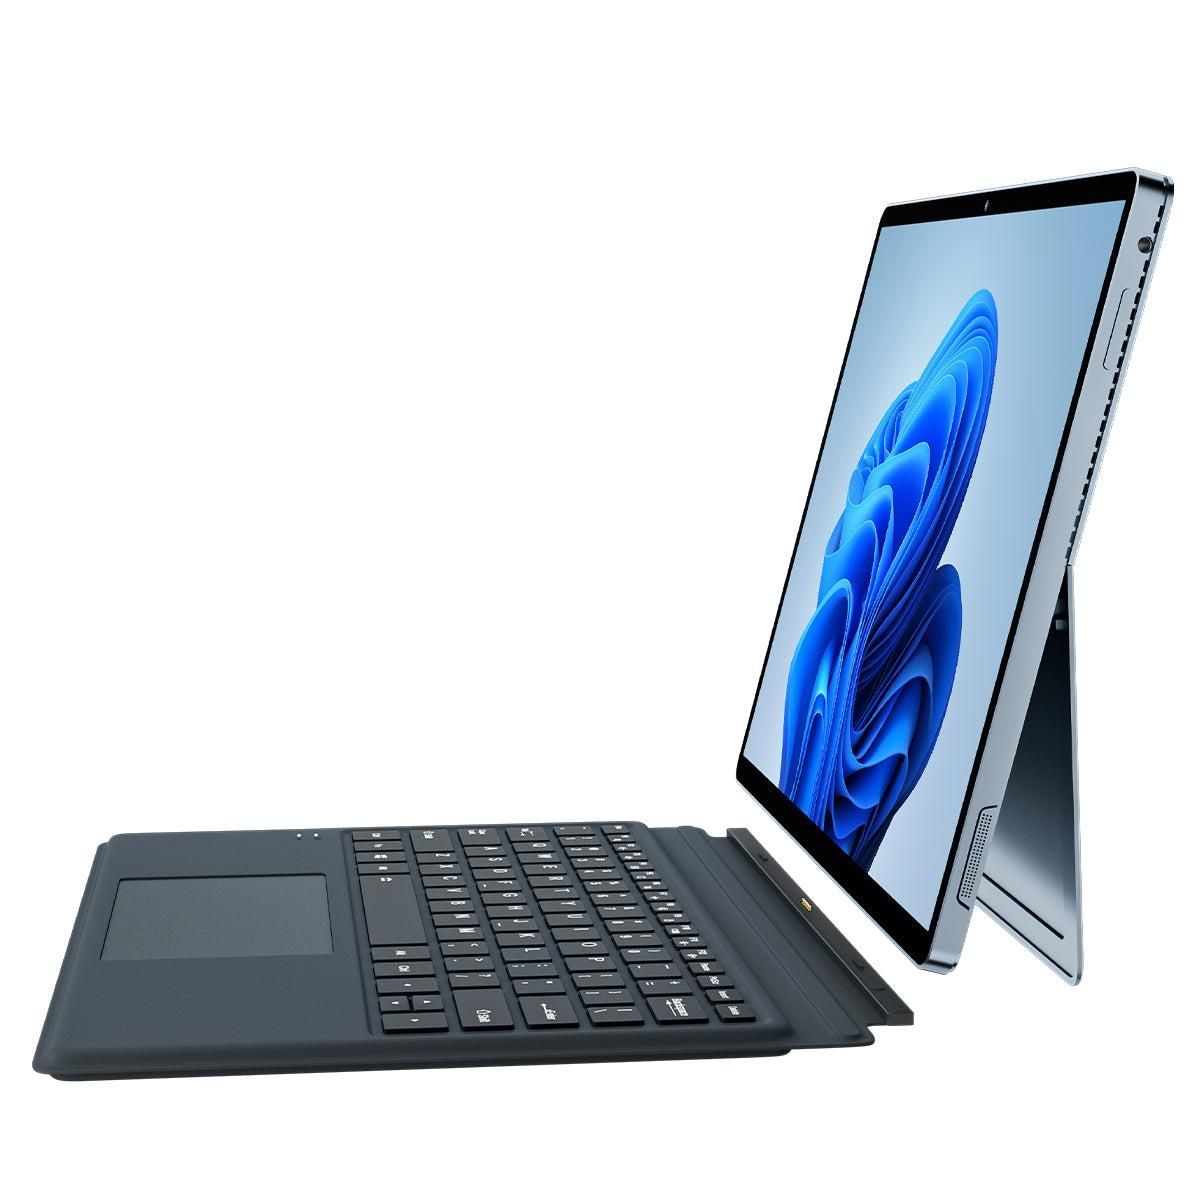 KUU LEBOOK Pro Ordinateur portable 2 en 1 Windows 10 Intel i7 8550U